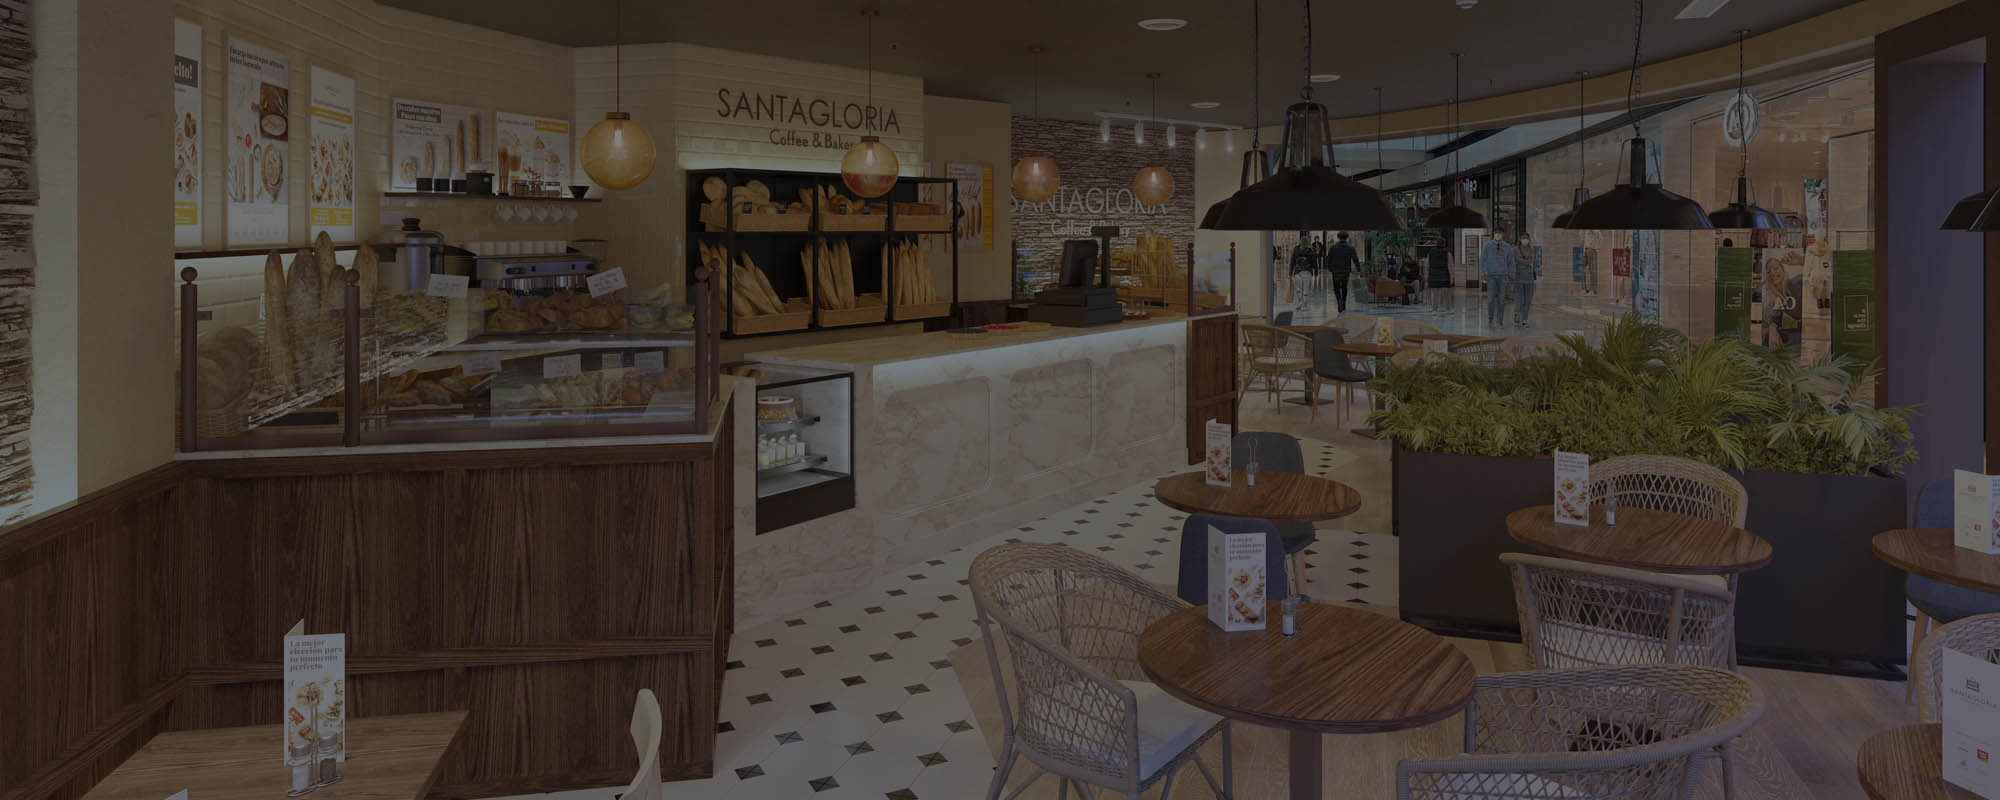 Renders 3D de una franquicia de Santagloria Coffee & Bakery